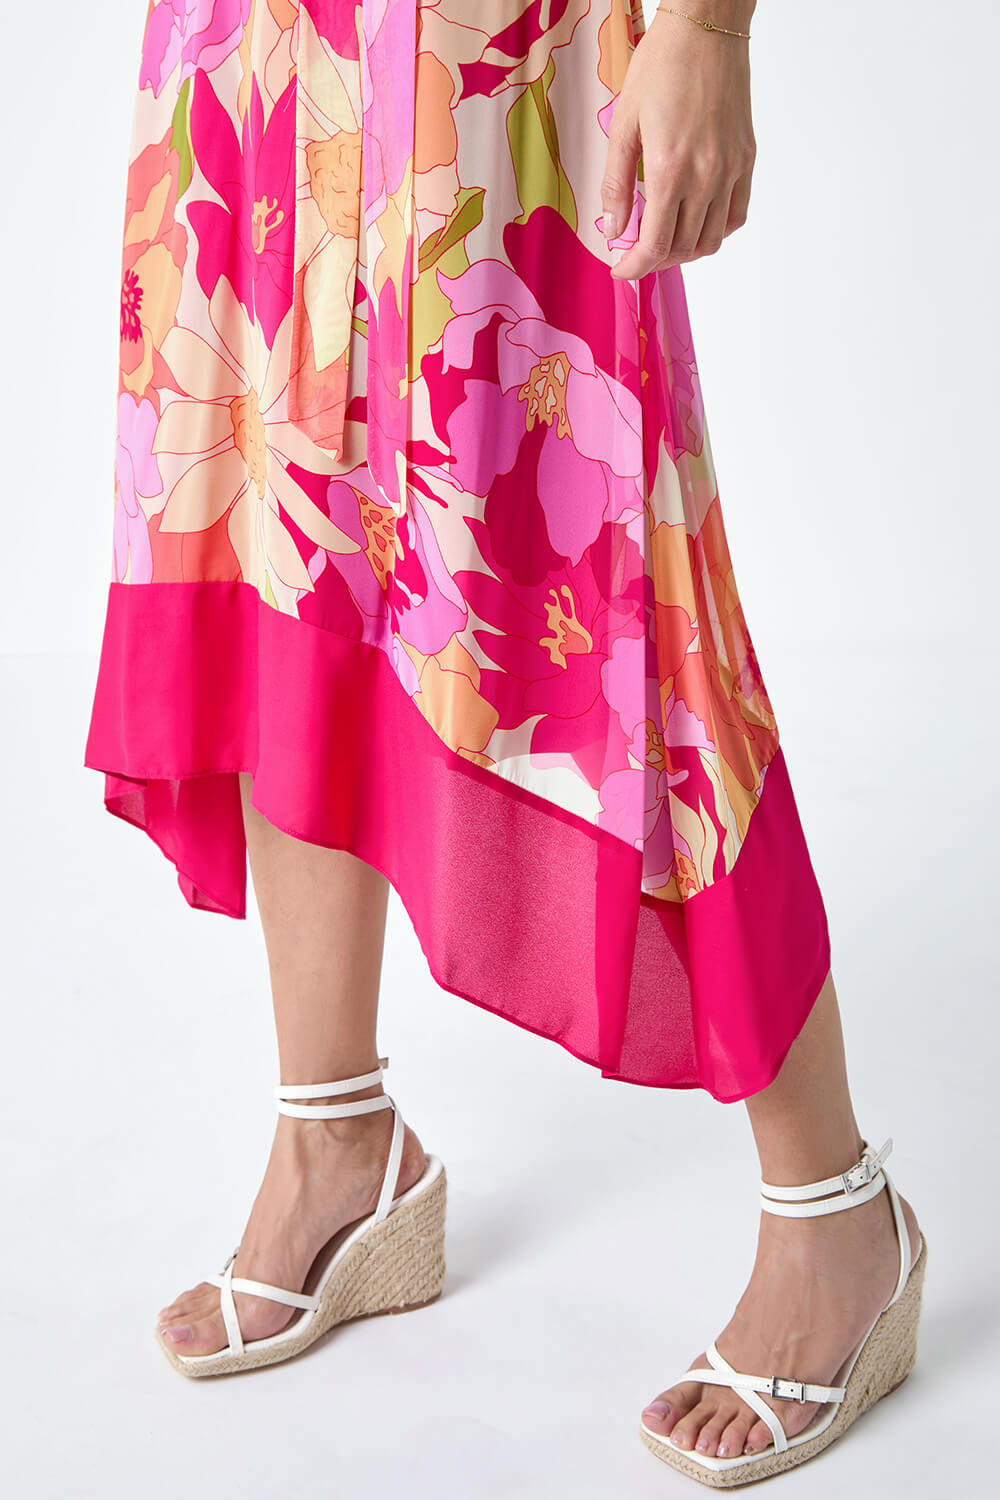 CERISE Sleeveless Floral Print Hanky Hem Dress, Image 5 of 5